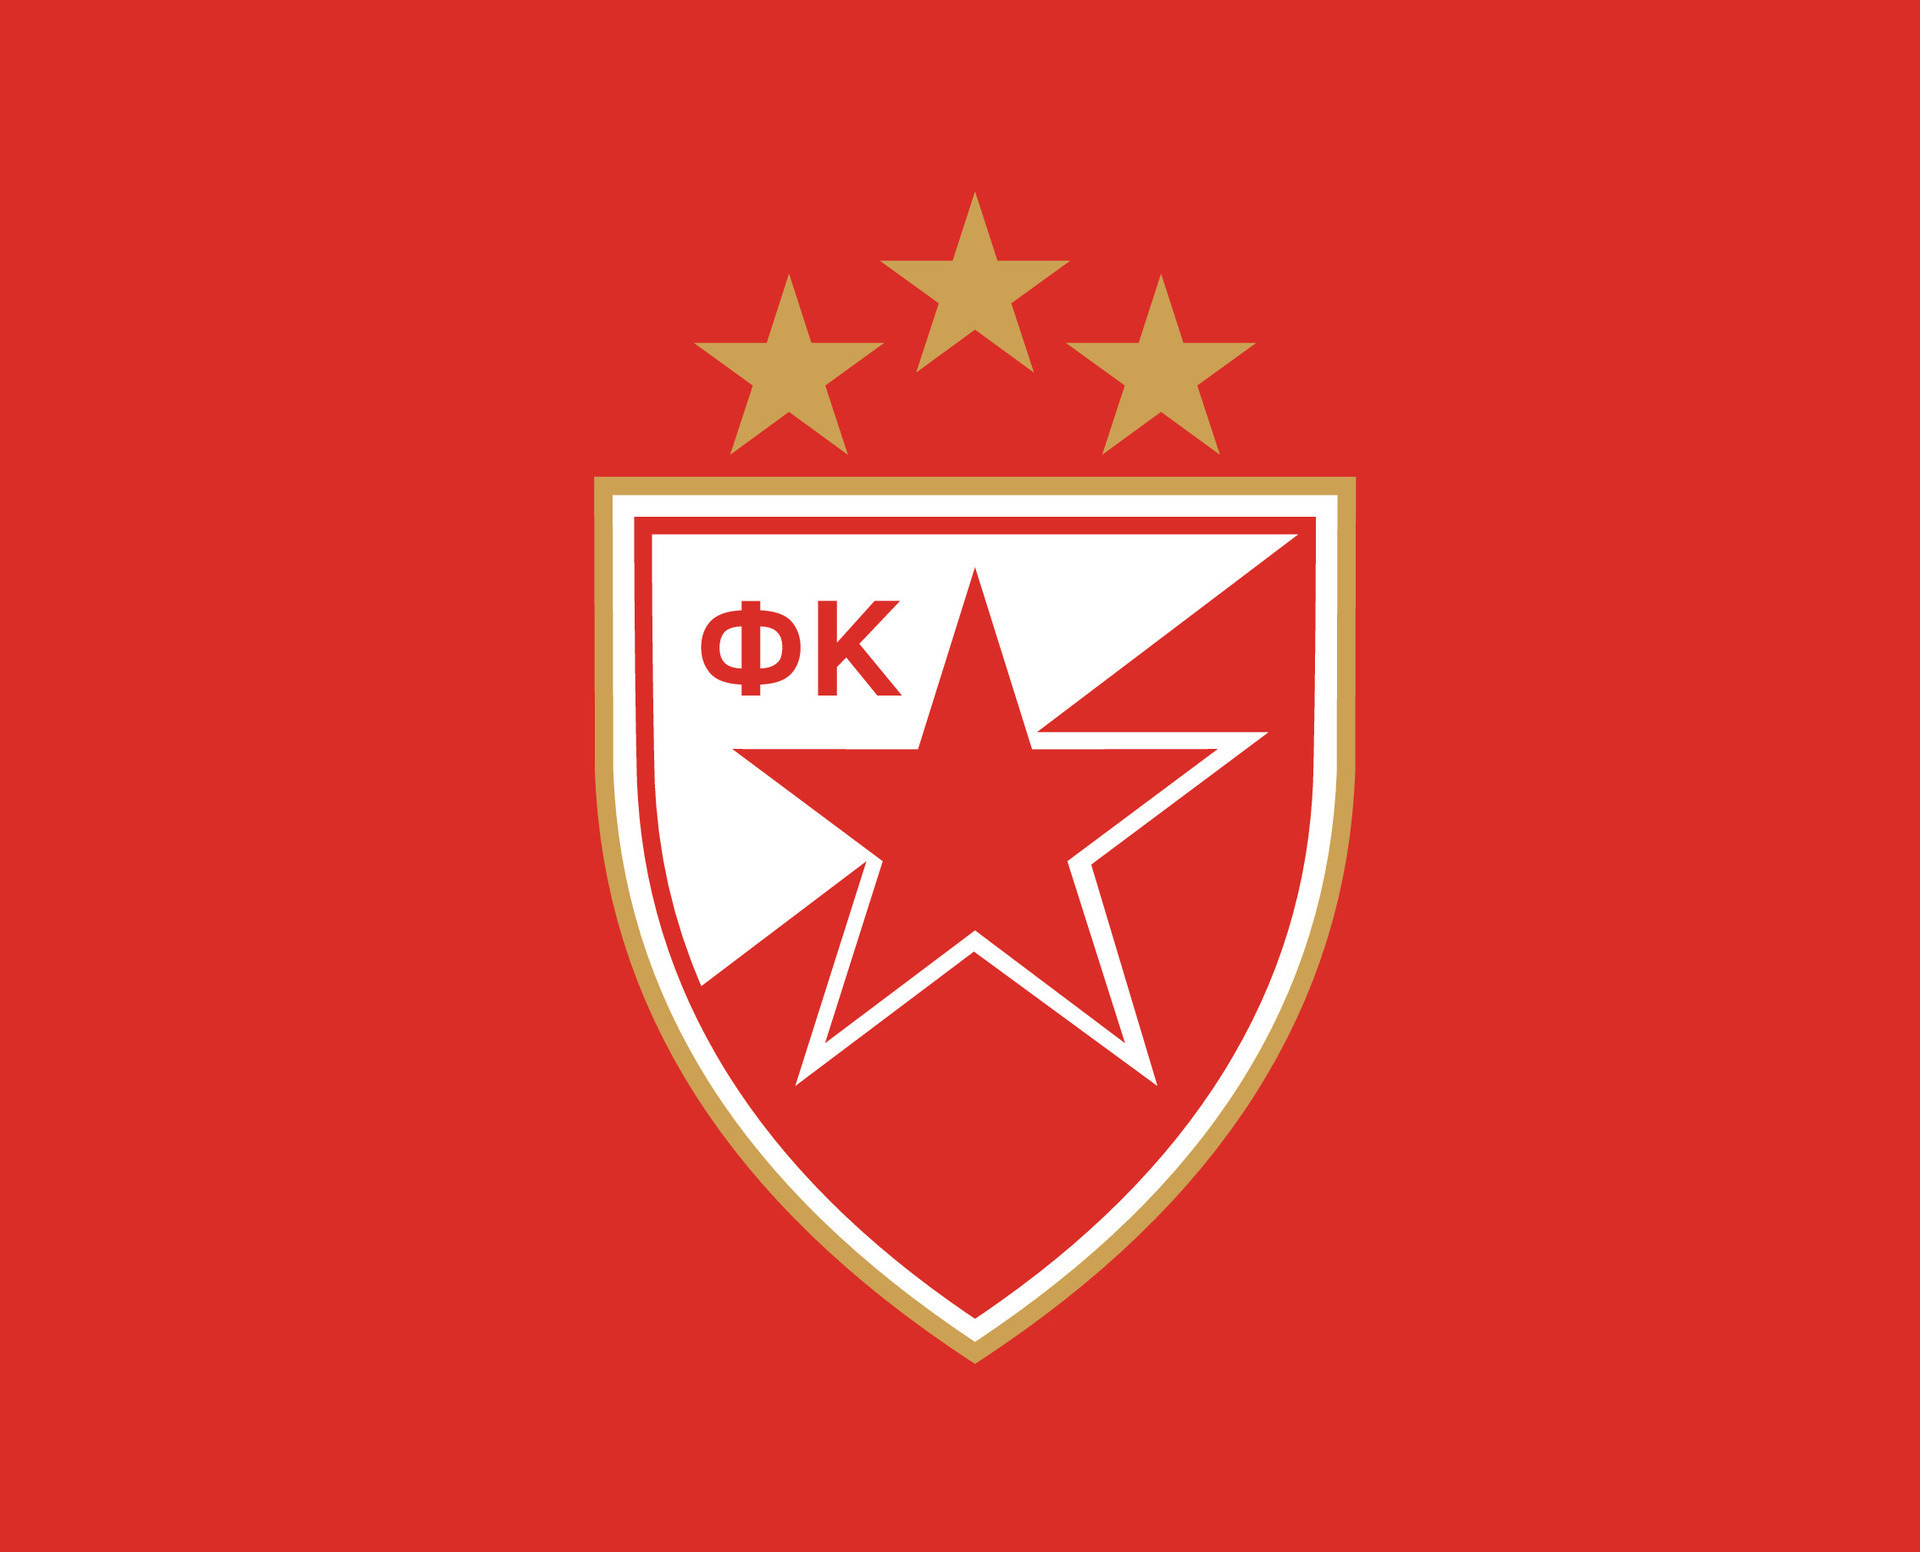 Crvena Zvezda Club Logo Symbol Serbia League Football Abstract Design  Vector Illustration With Black Background 30881228 Vector Art at Vecteezy